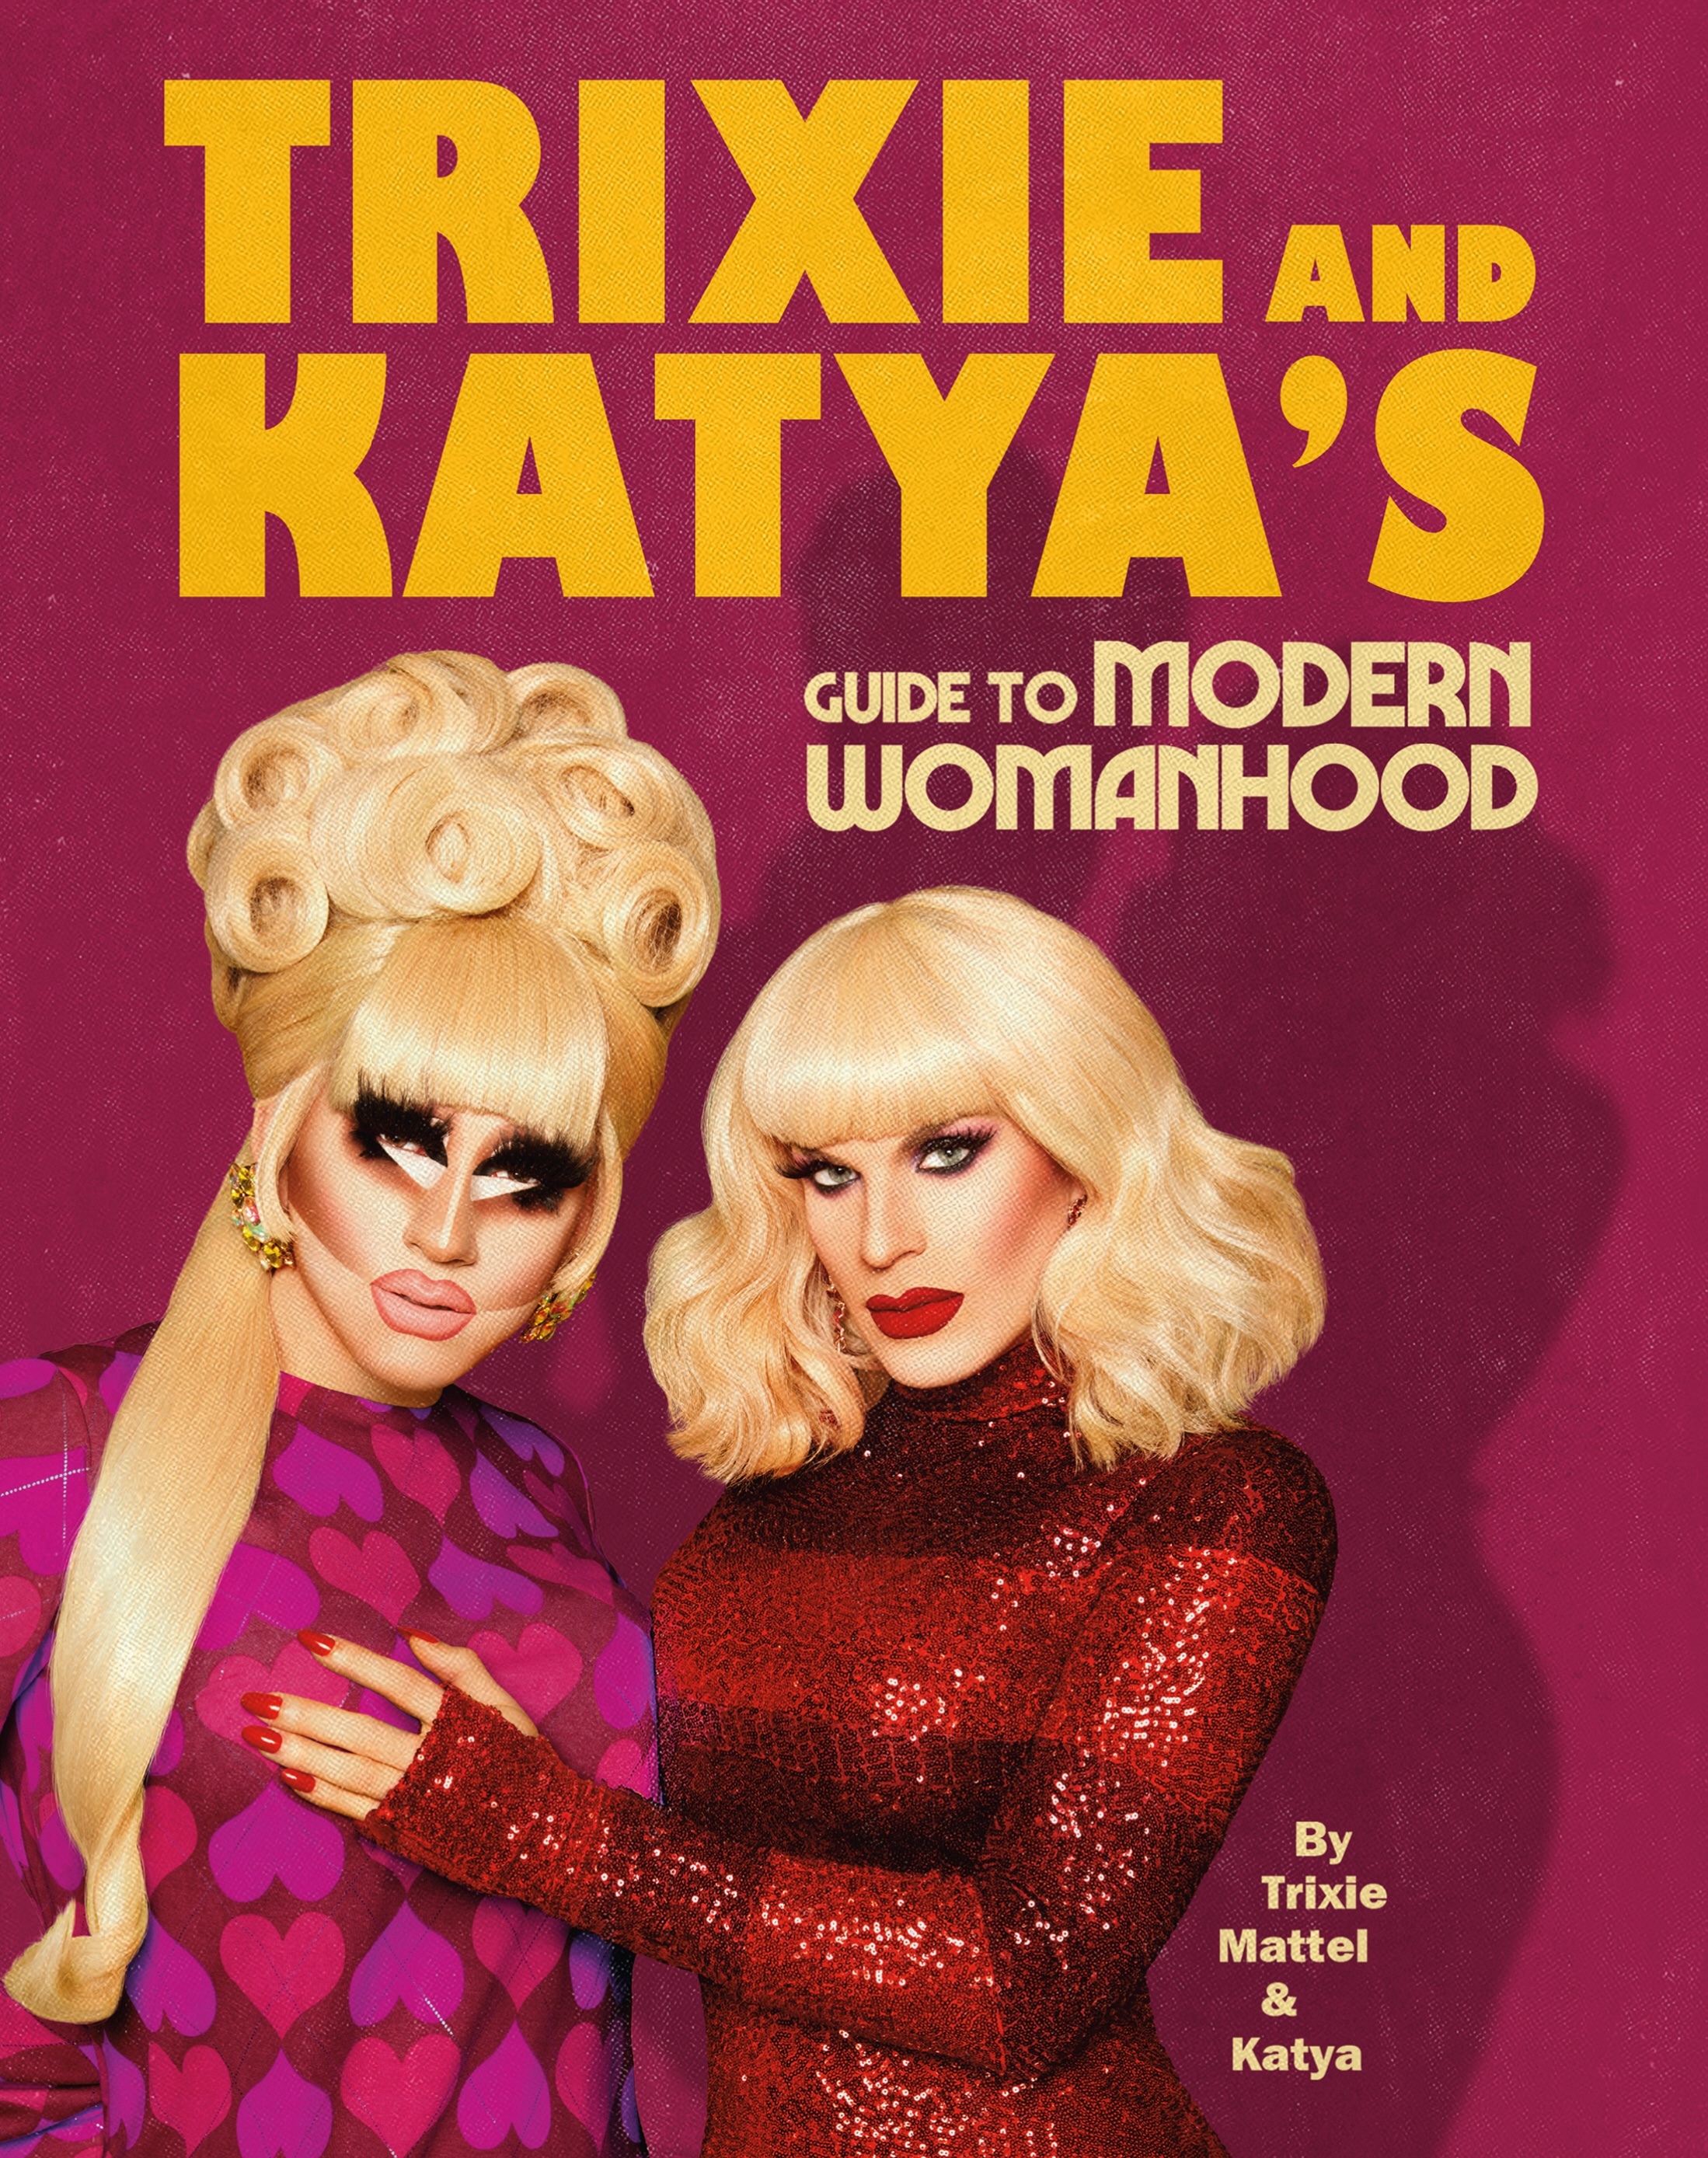 Book “Trixie and Katya’s Guide to Modern Womanhood” by Trixie Mattel, Katya Zamolodchikova — July 16, 2020